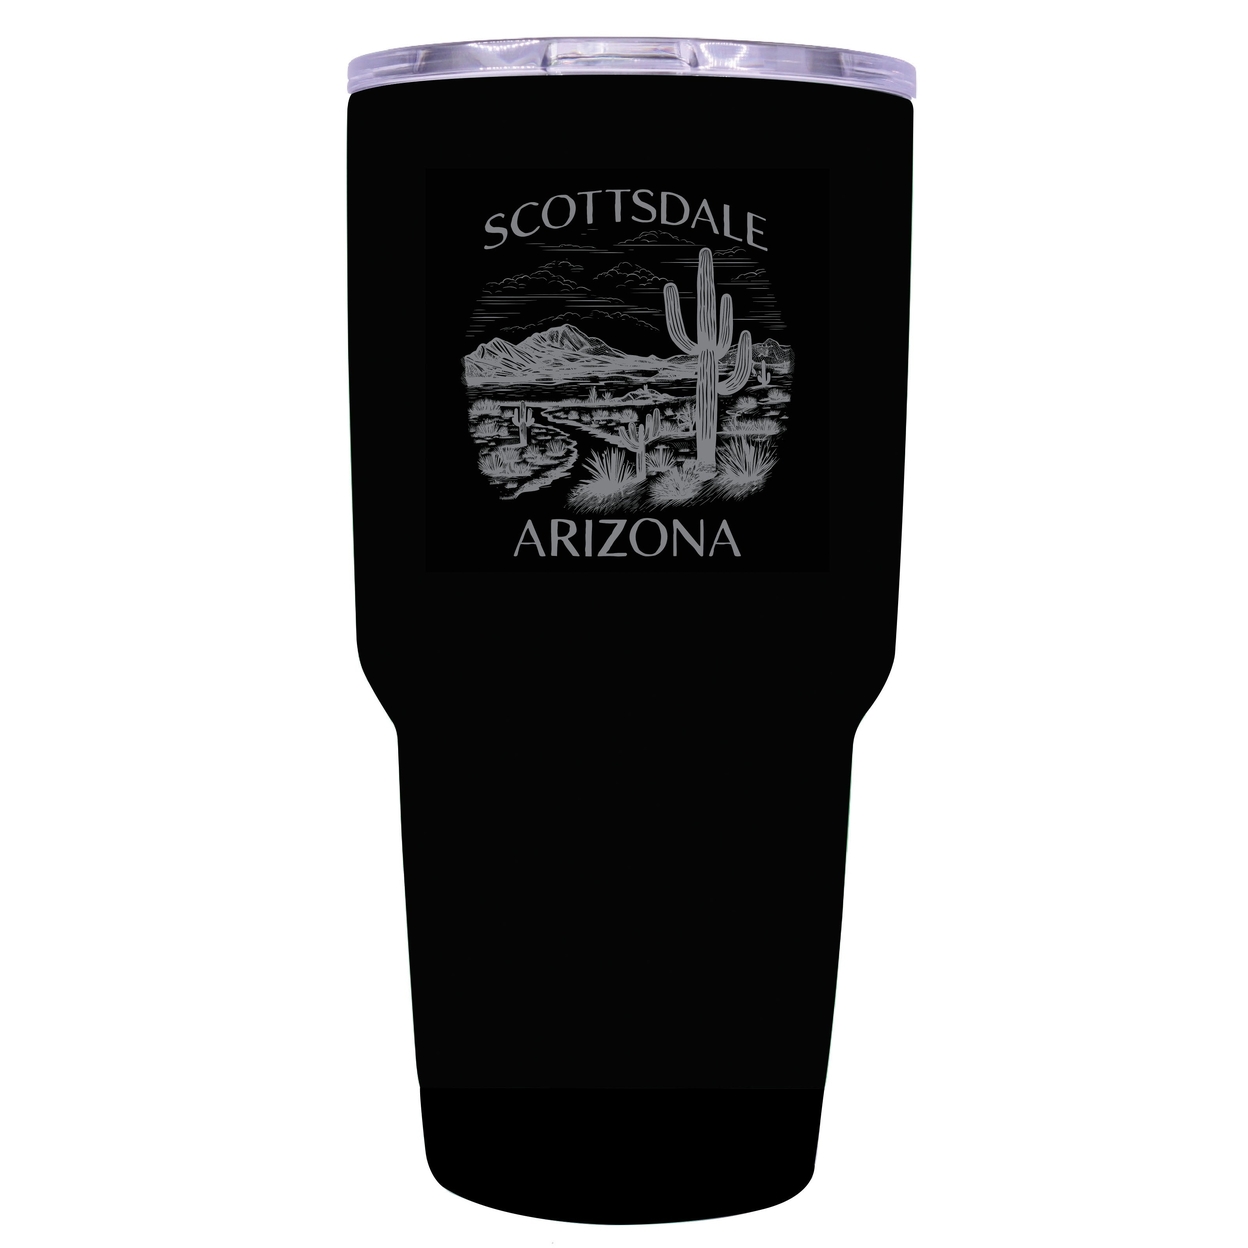 Scottsdale Arizona Souvenir 24 Oz Engraved Insulated Stainless Steel Tumbler - Black,,4-Pack